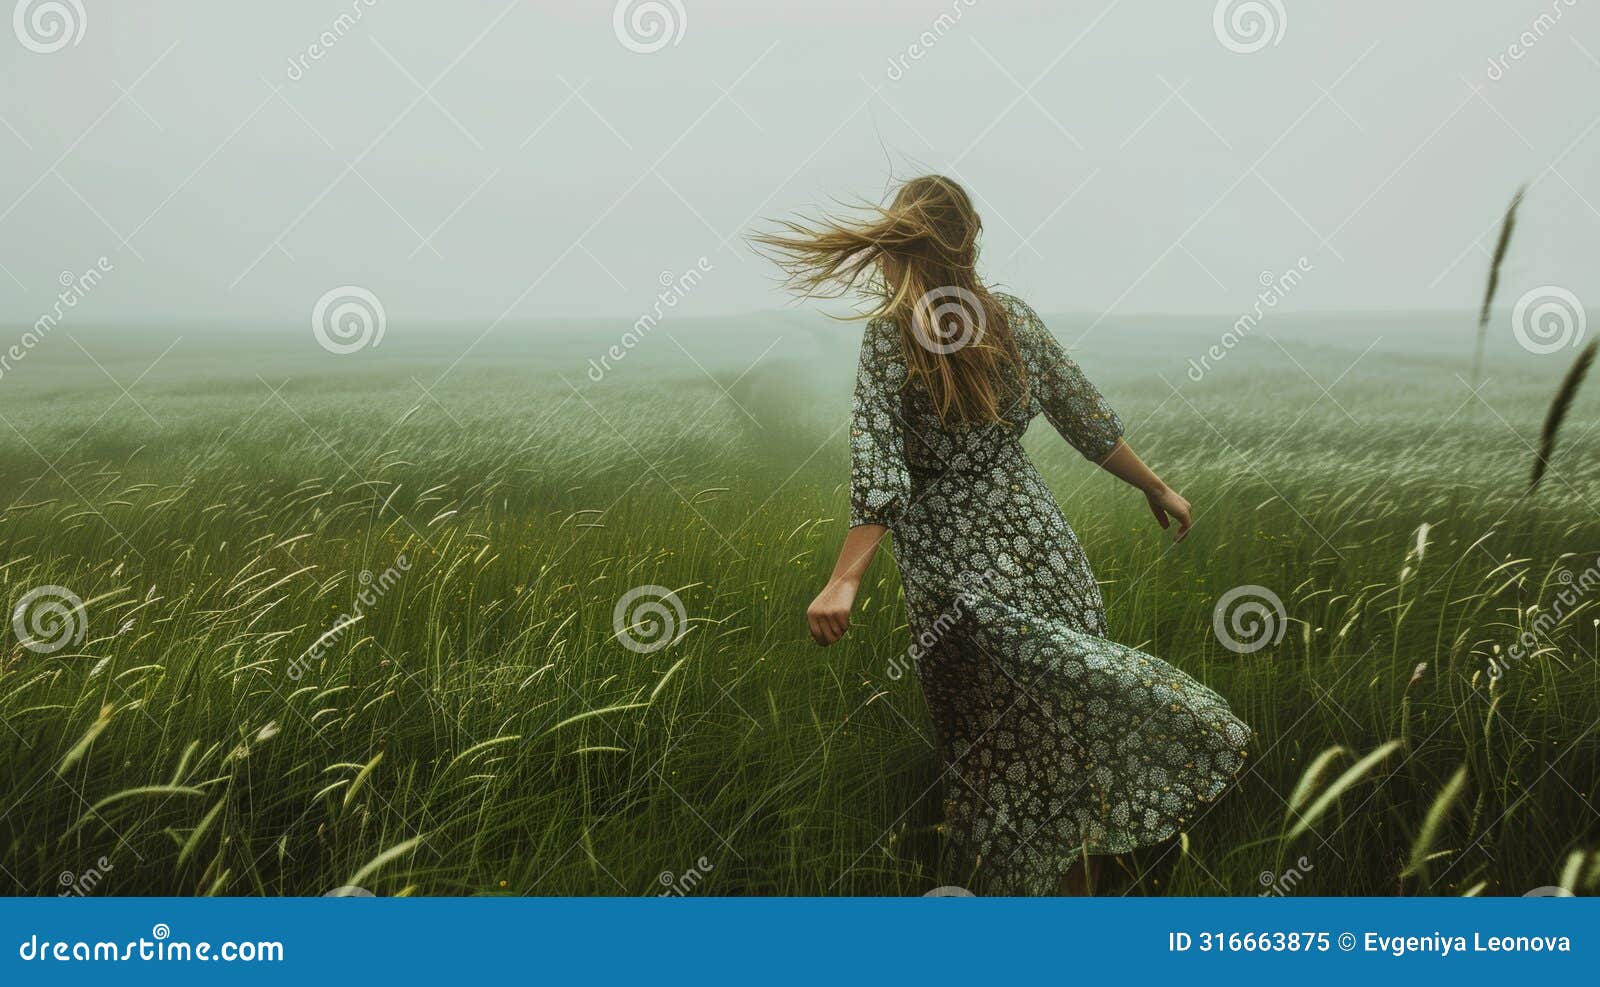 graceful woman in elegant dress strolling through breezy green field with tall grass